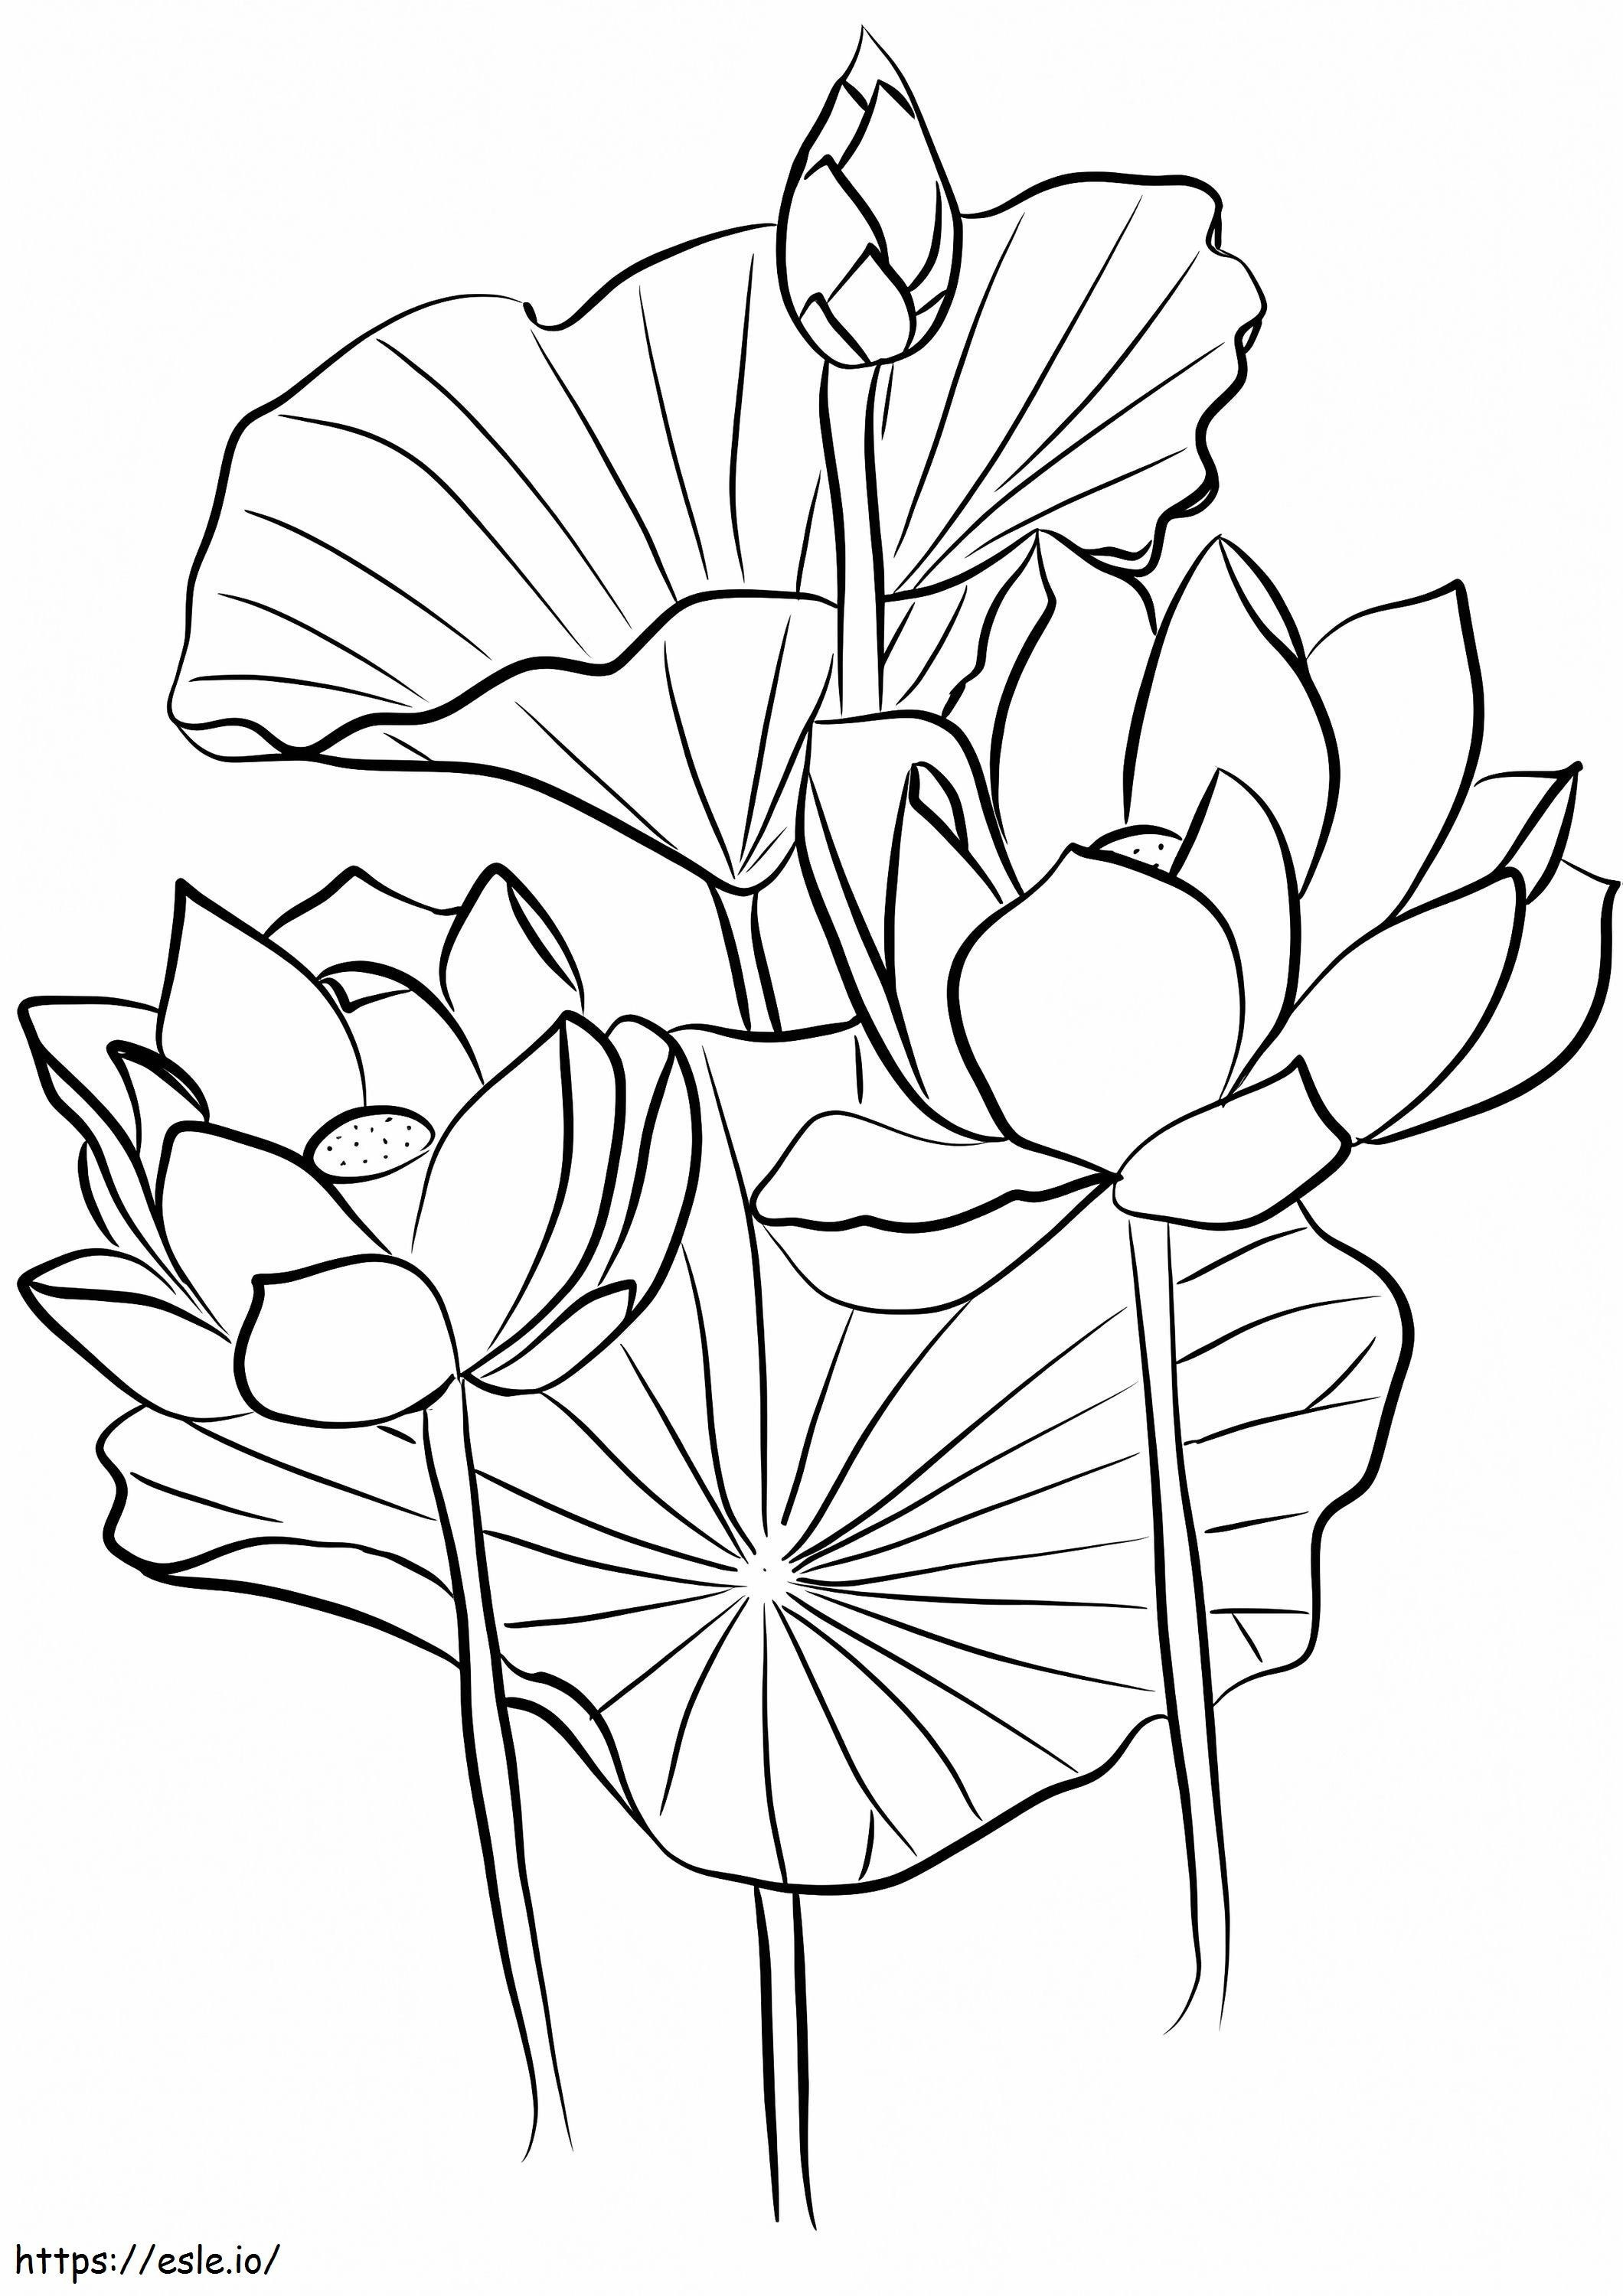 Drie lotussen kleurplaat kleurplaat